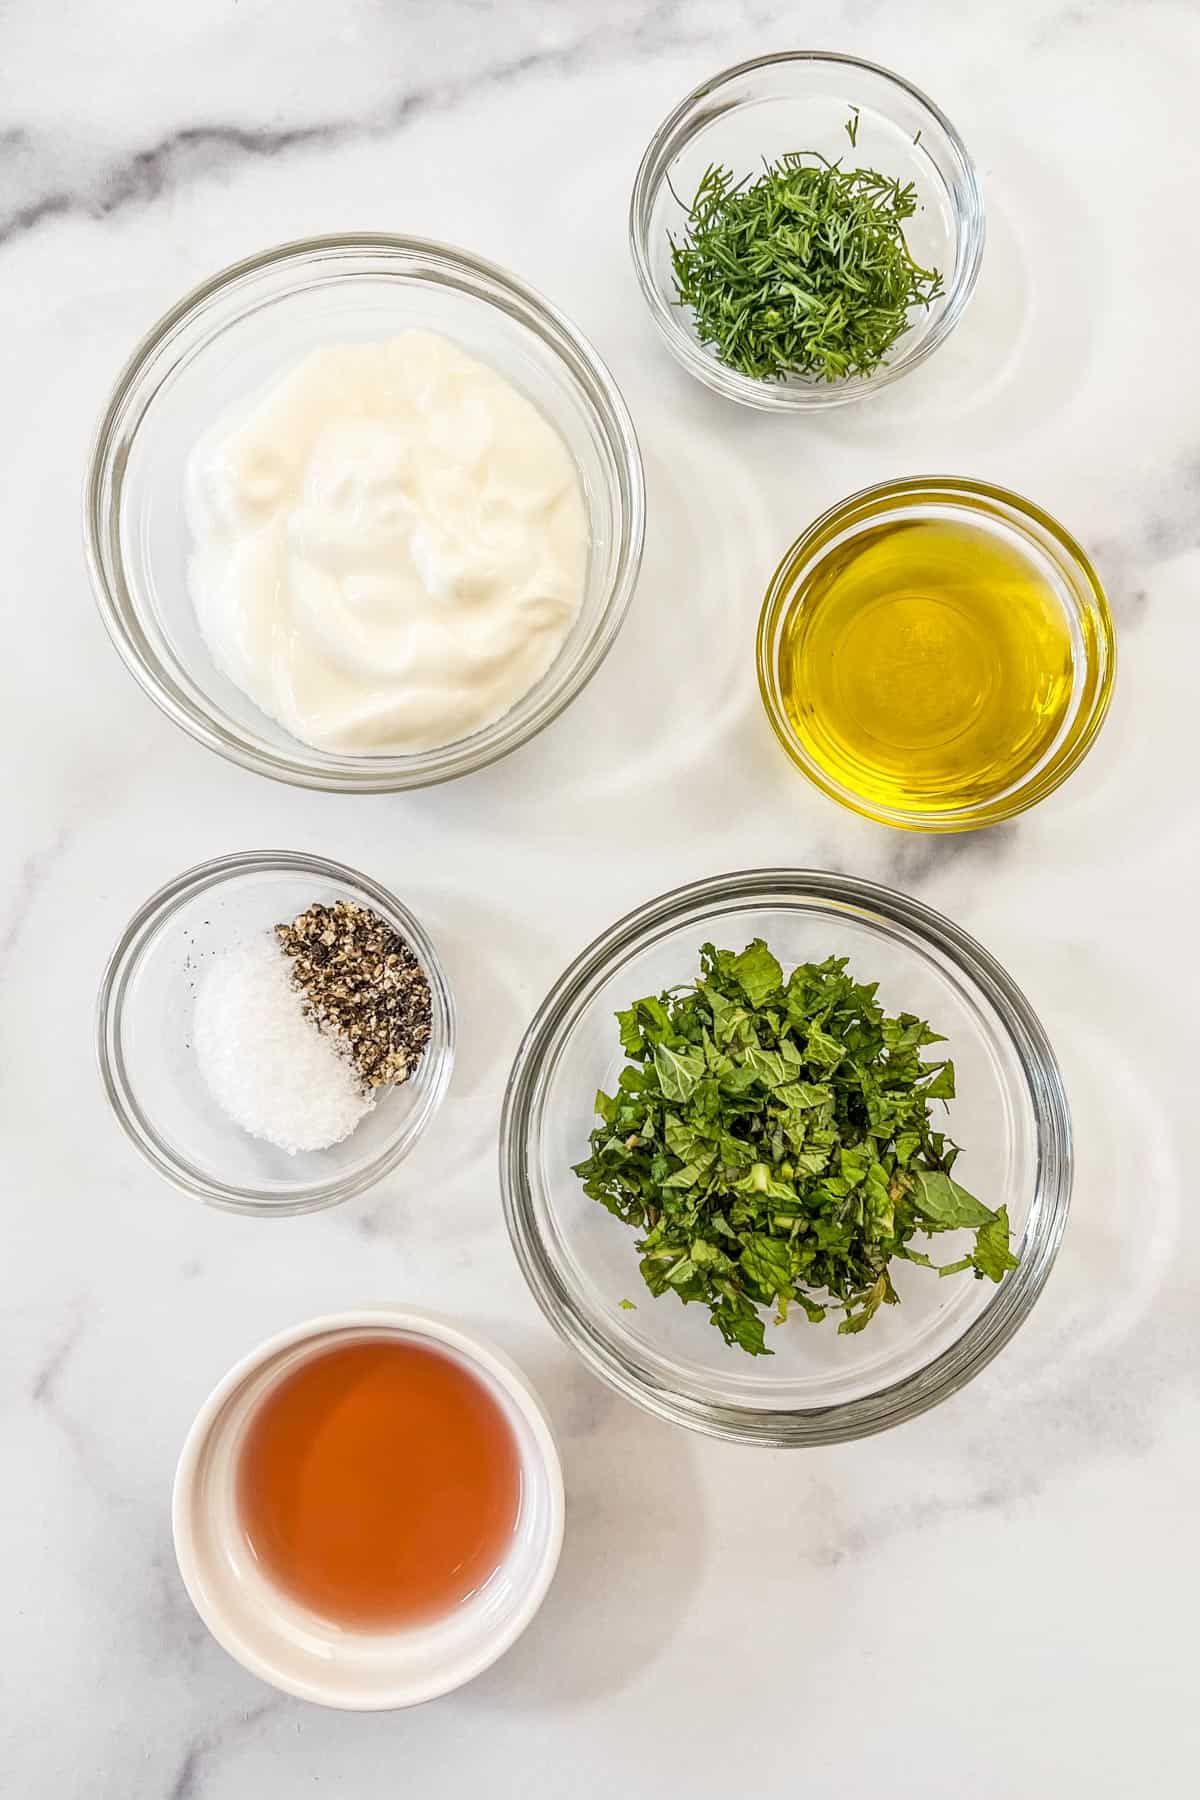 Yogurt dill salad dressing ingredients in small bowls.